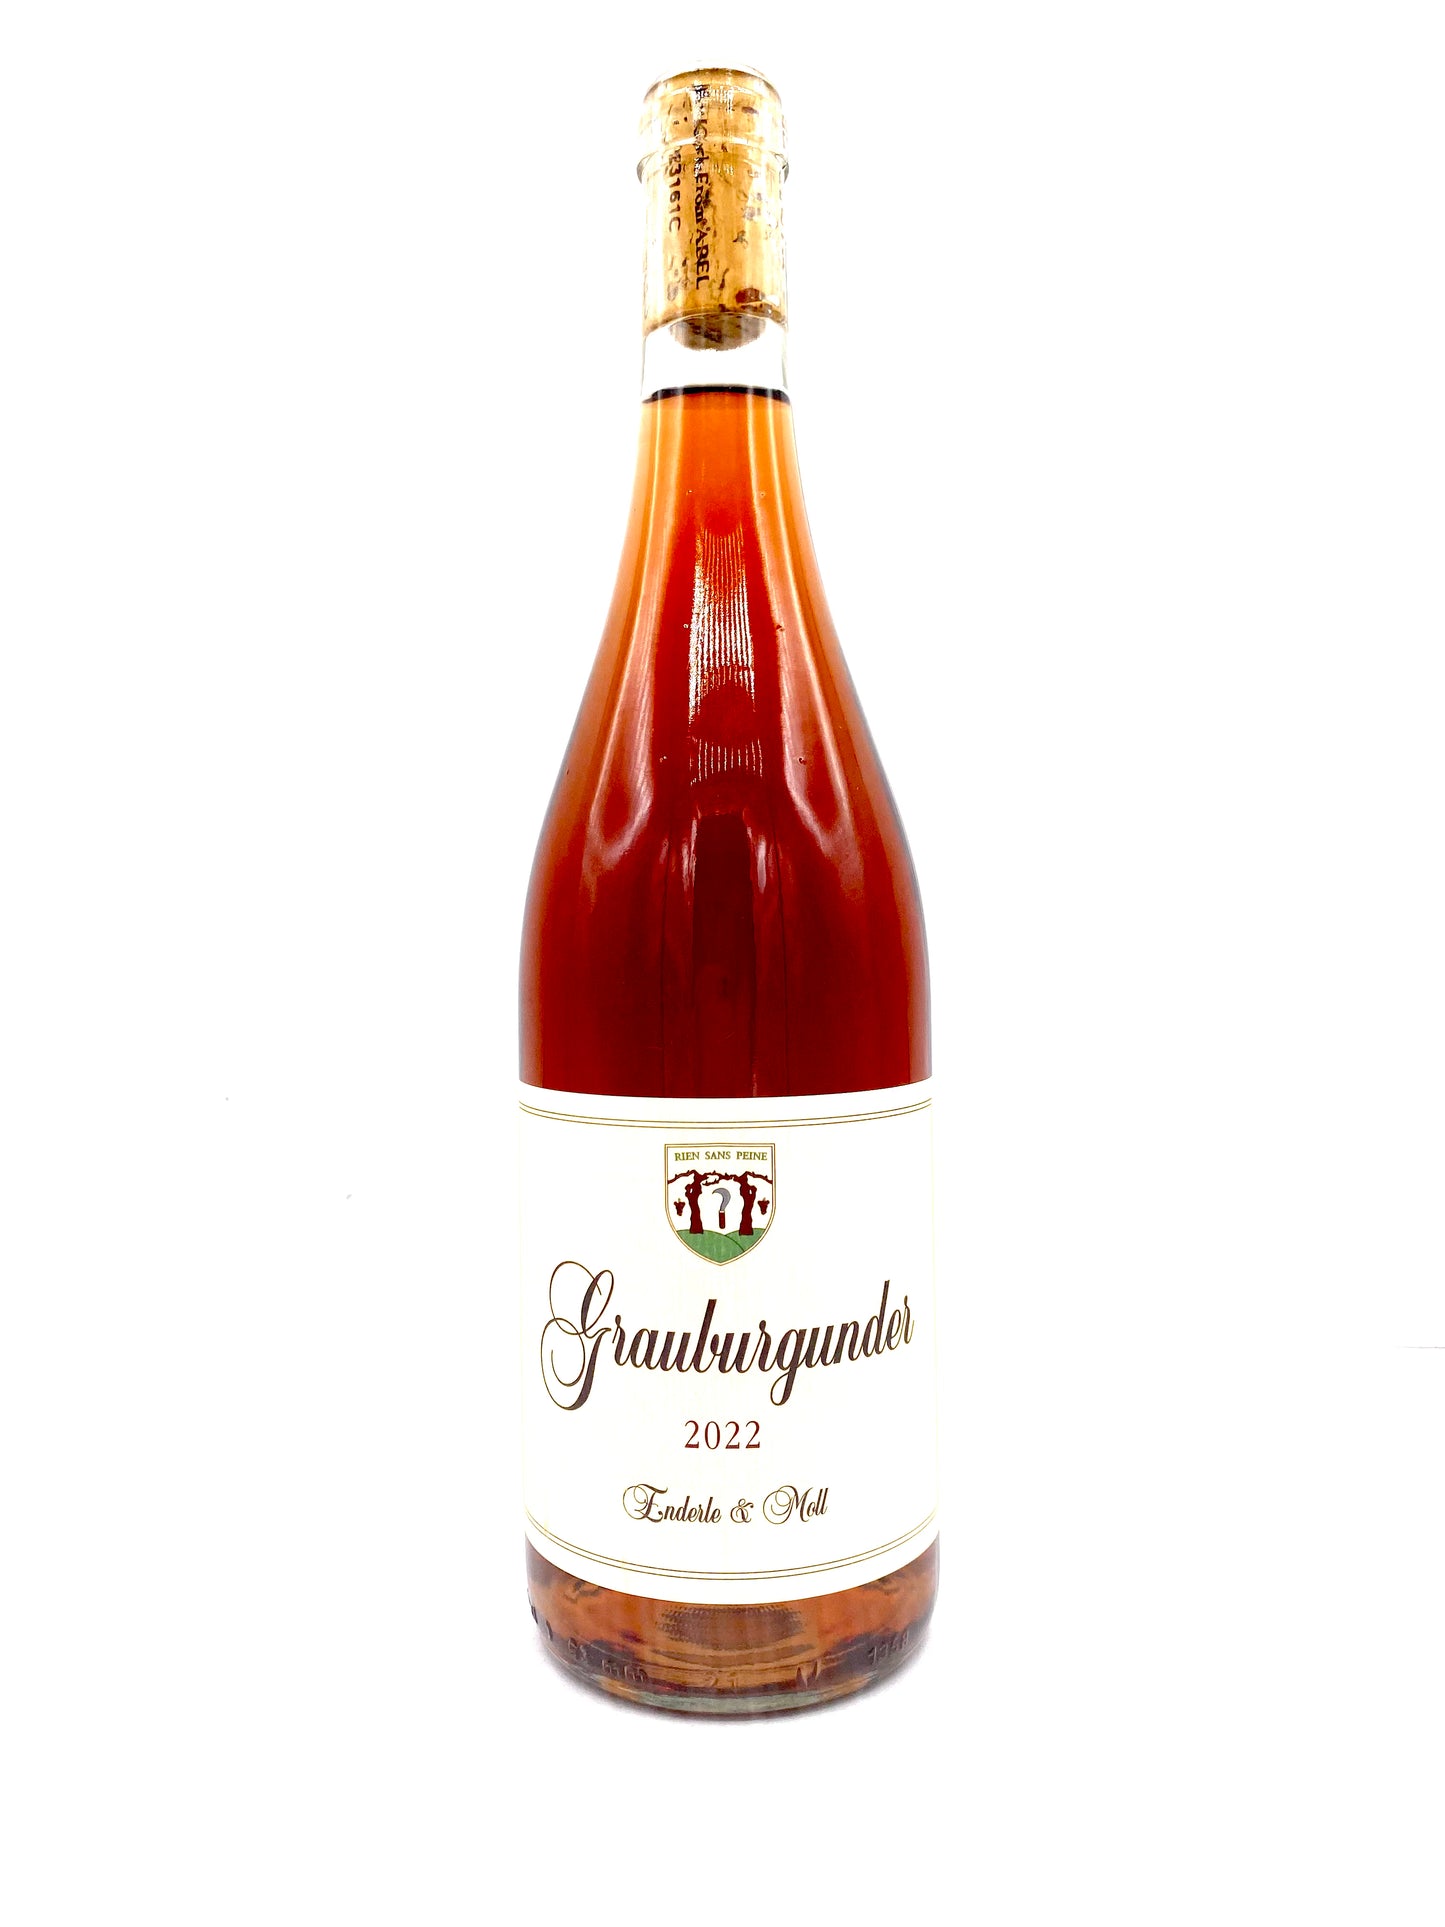 Enderle & Moll 'Grauburgunder' Pinot Gris 2022